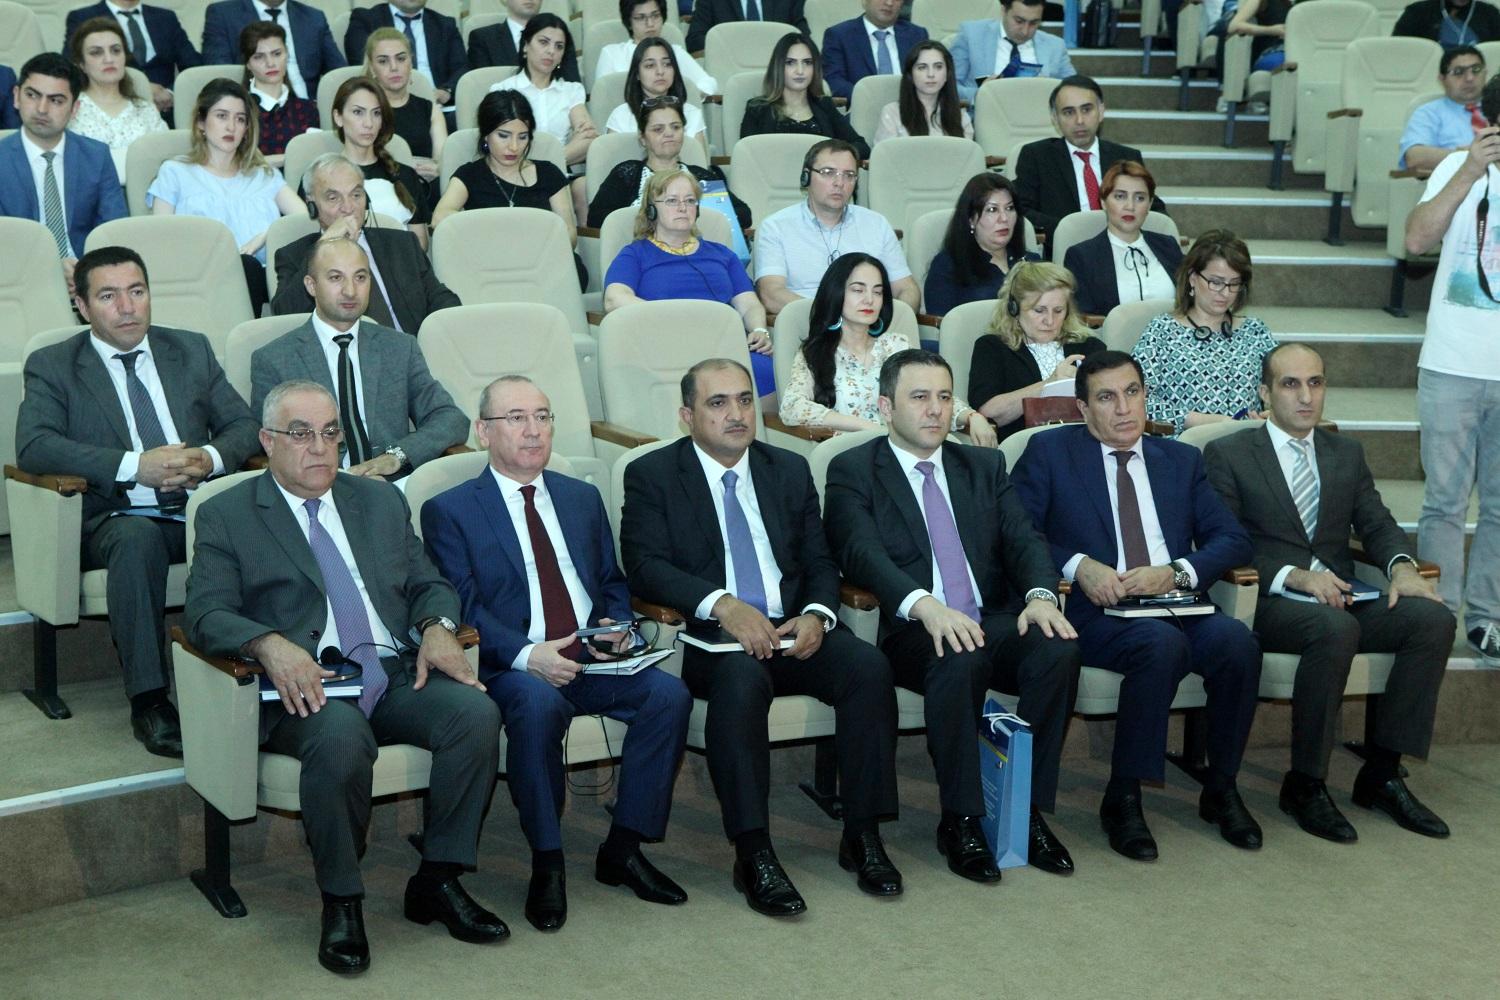 За 11 лет среднемесячная пенсия в Азербайджане выросла в 6,4 раза - министр (ФОТО) - Gallery Image